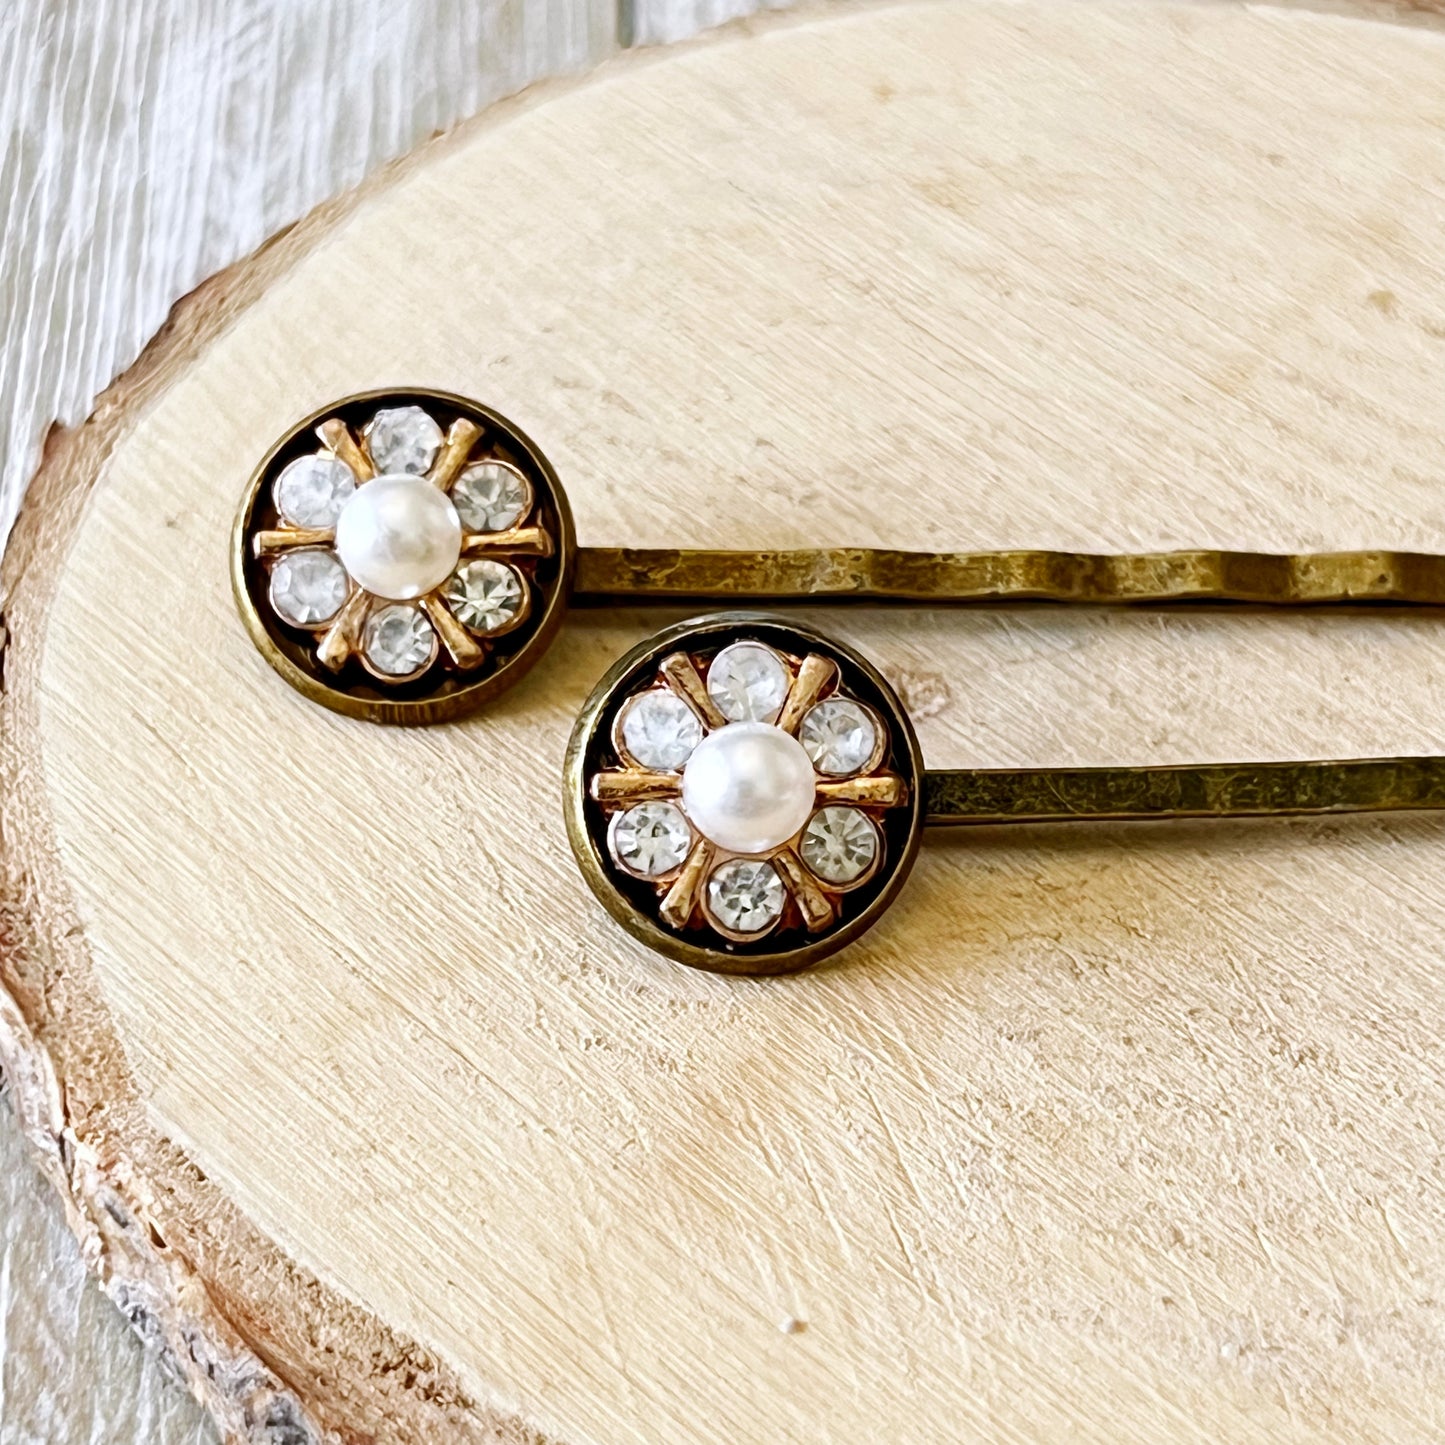 Floral Rhinestone & Pearl Hair Pin Set: Elegant Accessories for Graceful Hairstyles